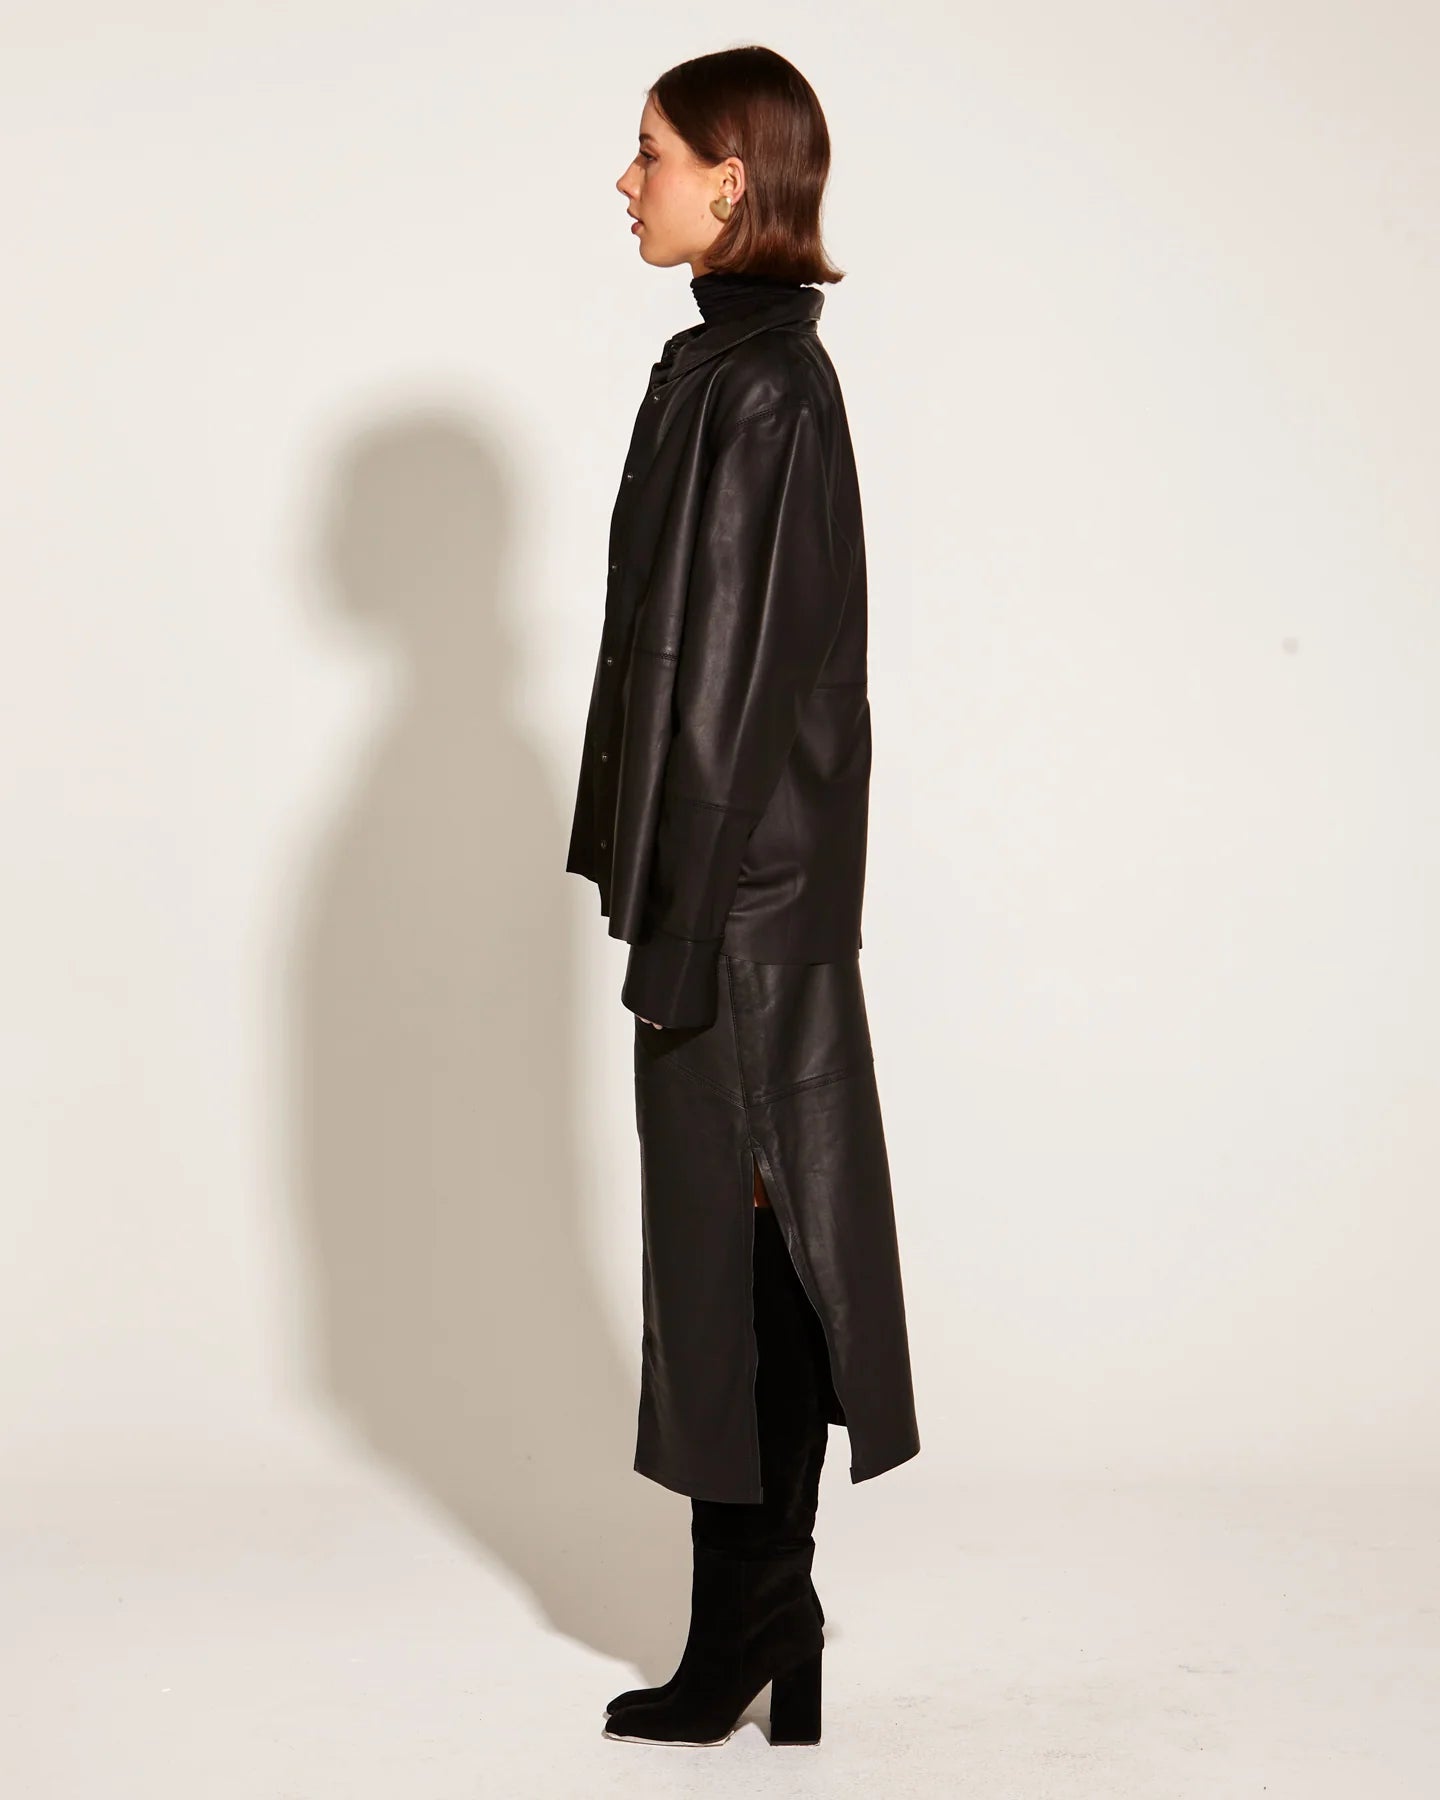 Fate & Becker - Underground 100% Leather Oversized Shacket - Black